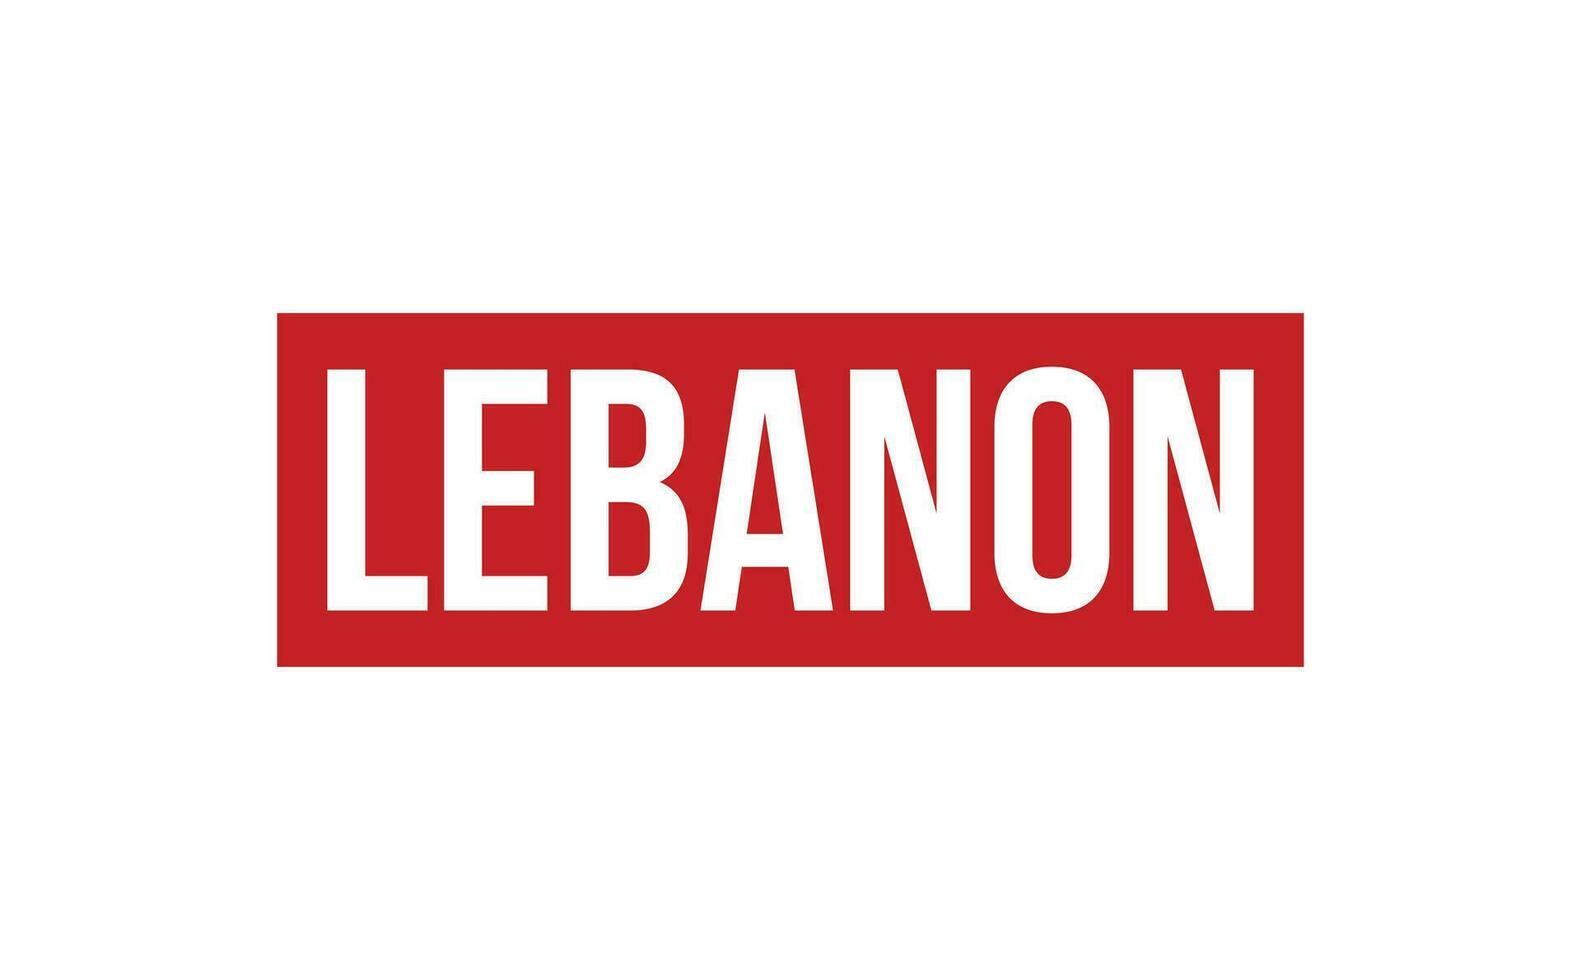 Libanon Gummi Briefmarke Siegel Vektor